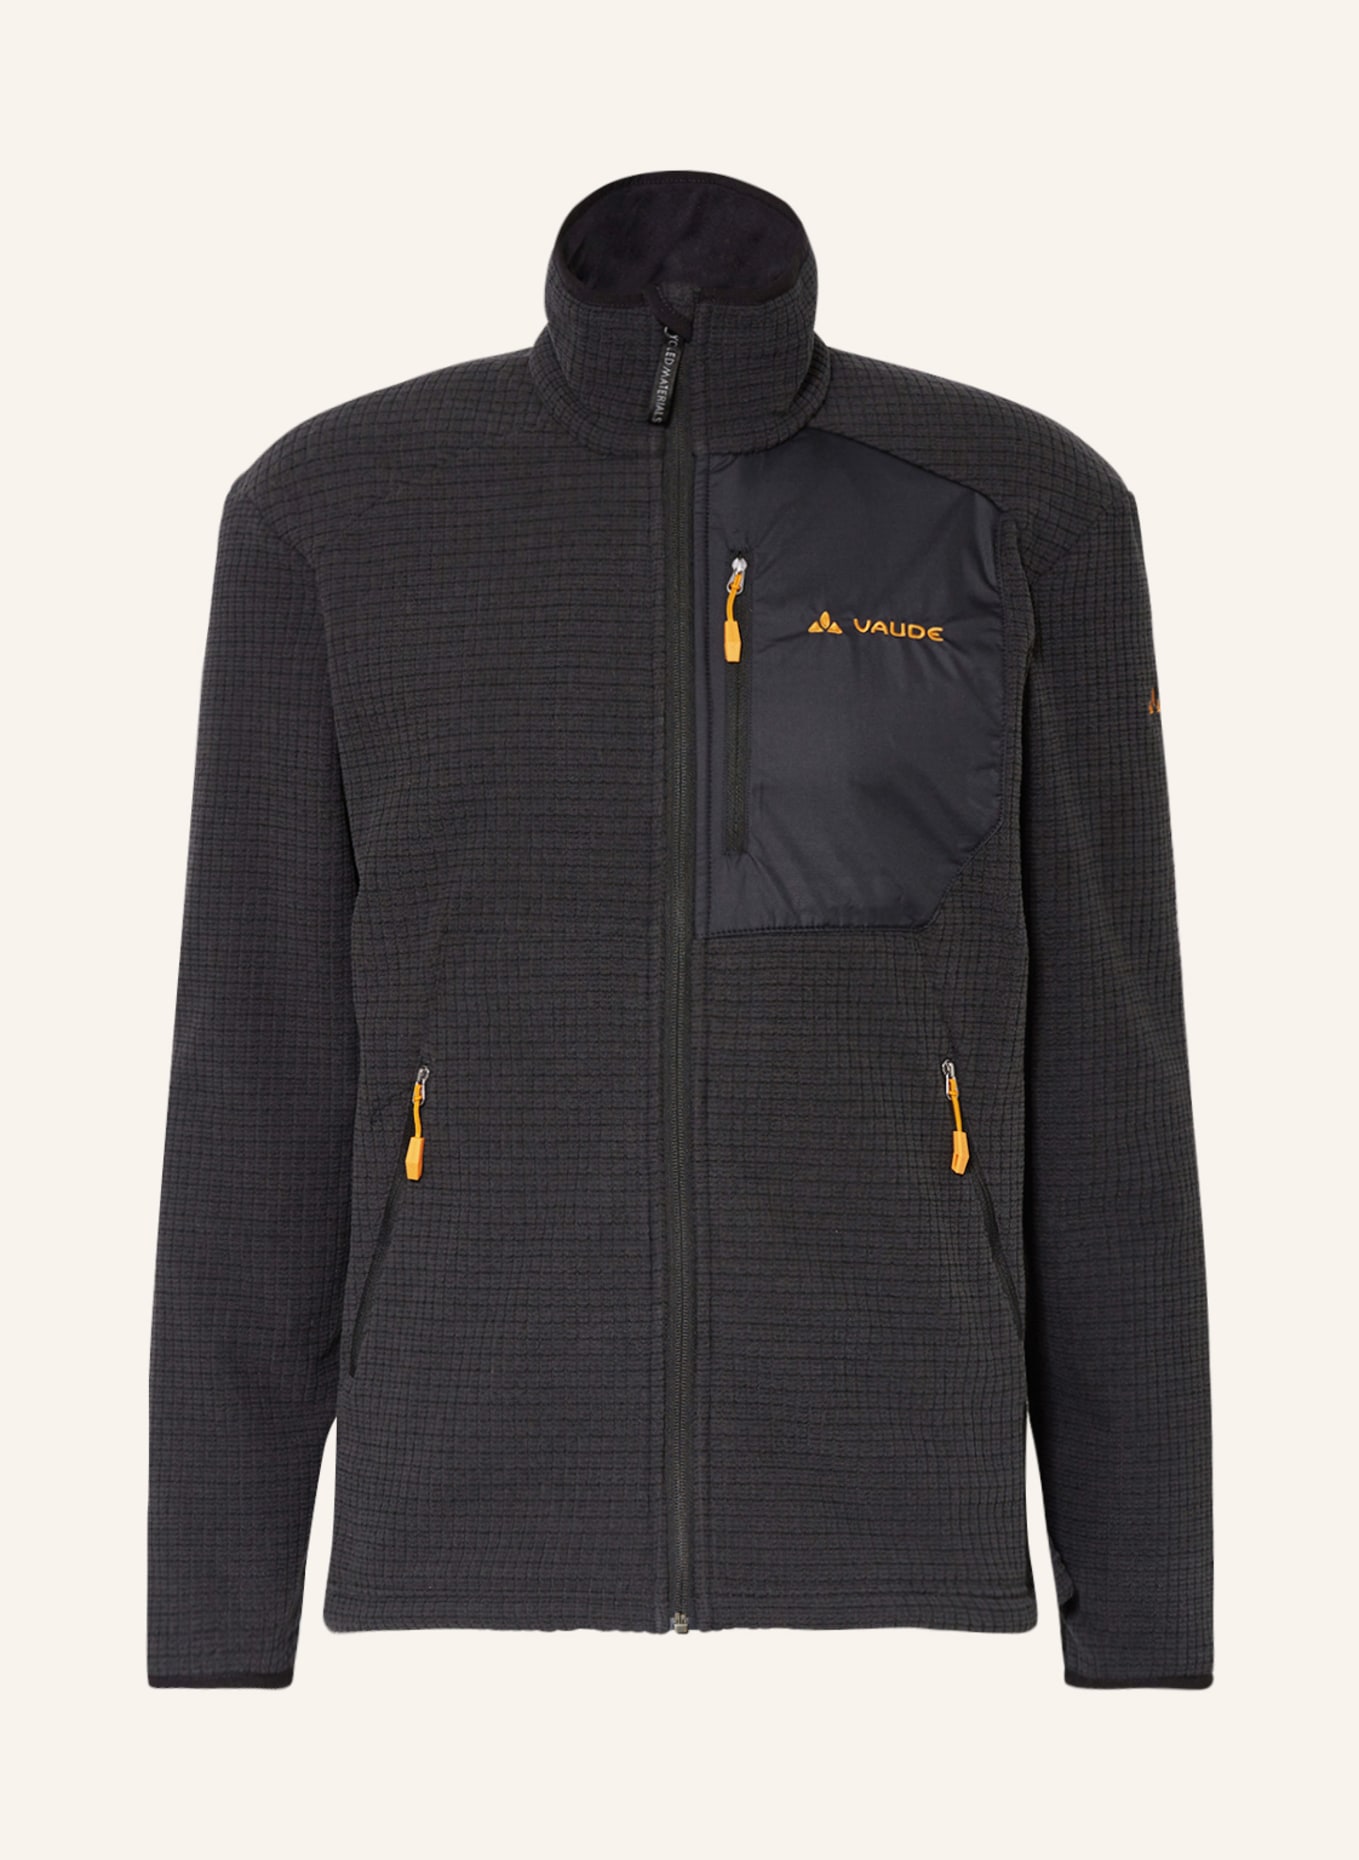 Mammut Innominata Light Midlayer Jacket - Fleece jacket Men's, Buy online